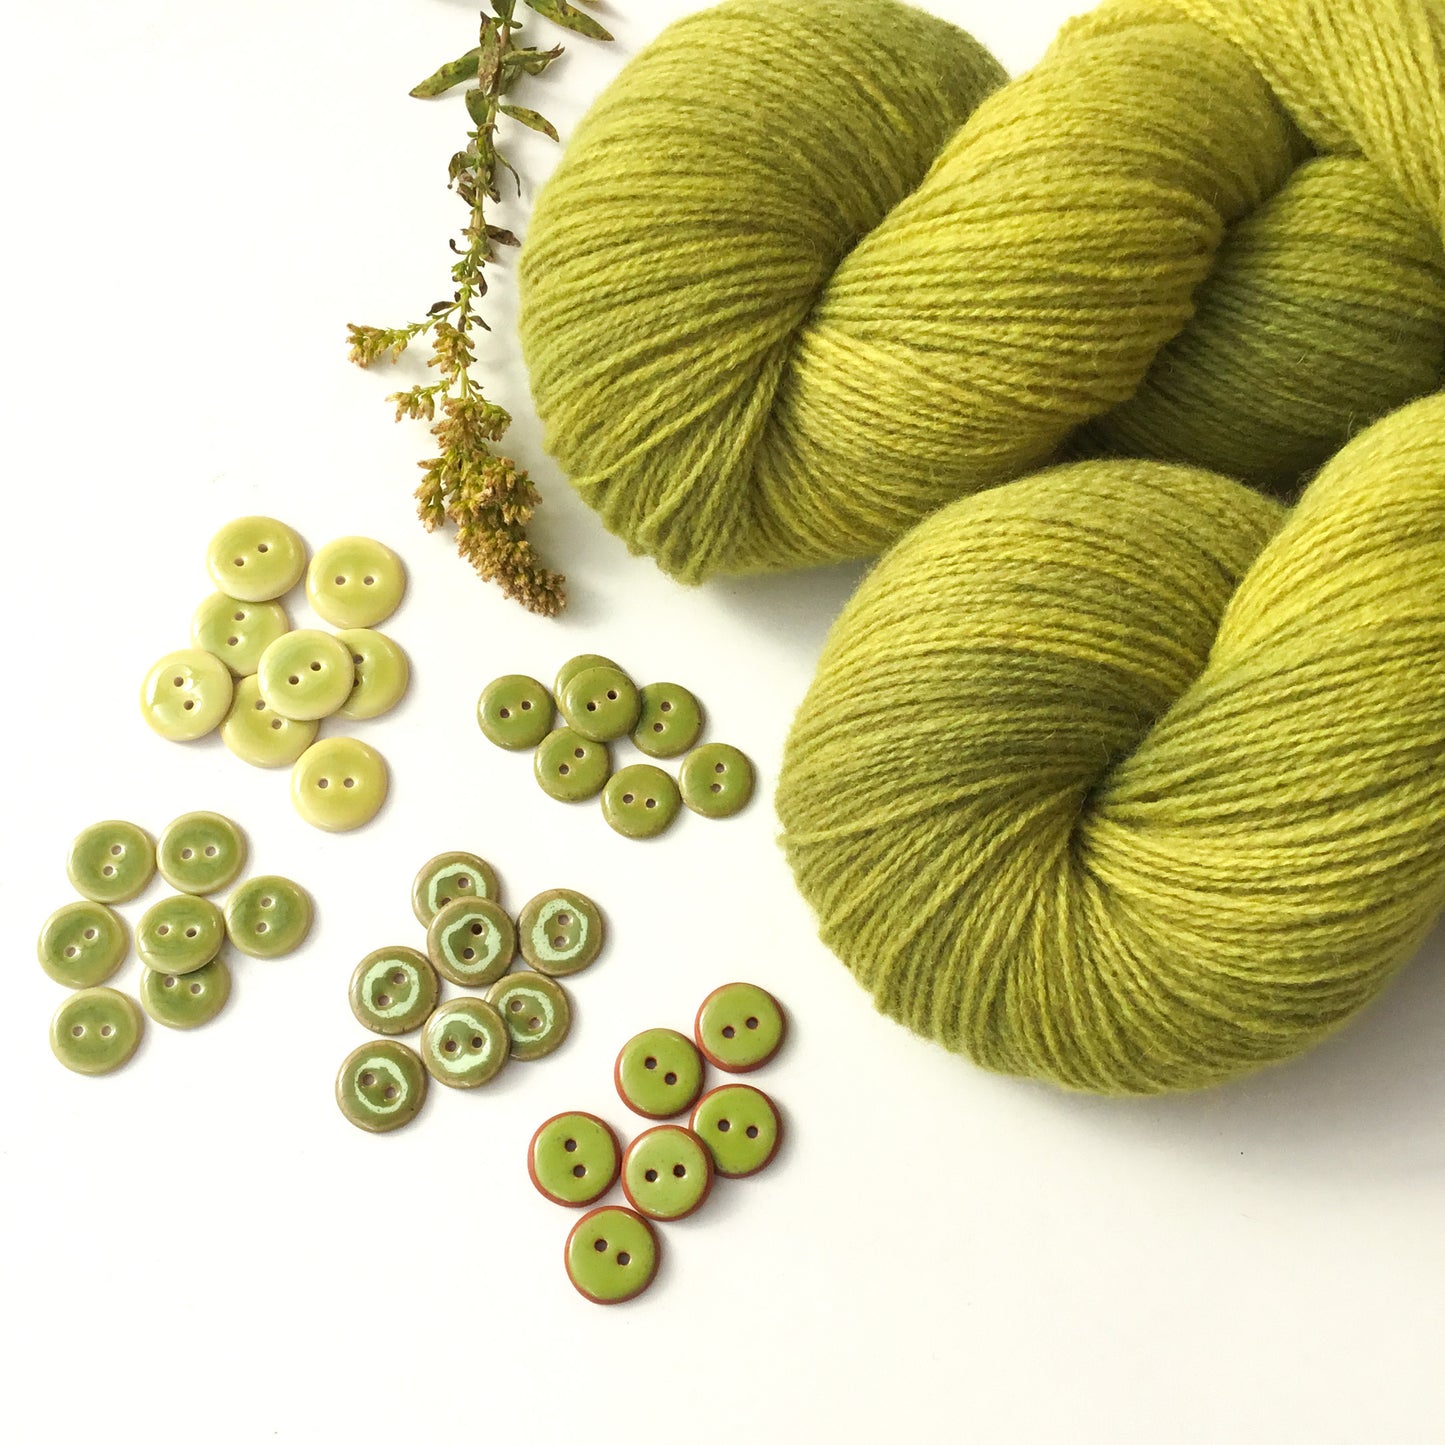 Olive Green Fingering Wool Yarn (80 Merino/20 Romney) 2 ply - 4 oz skeins